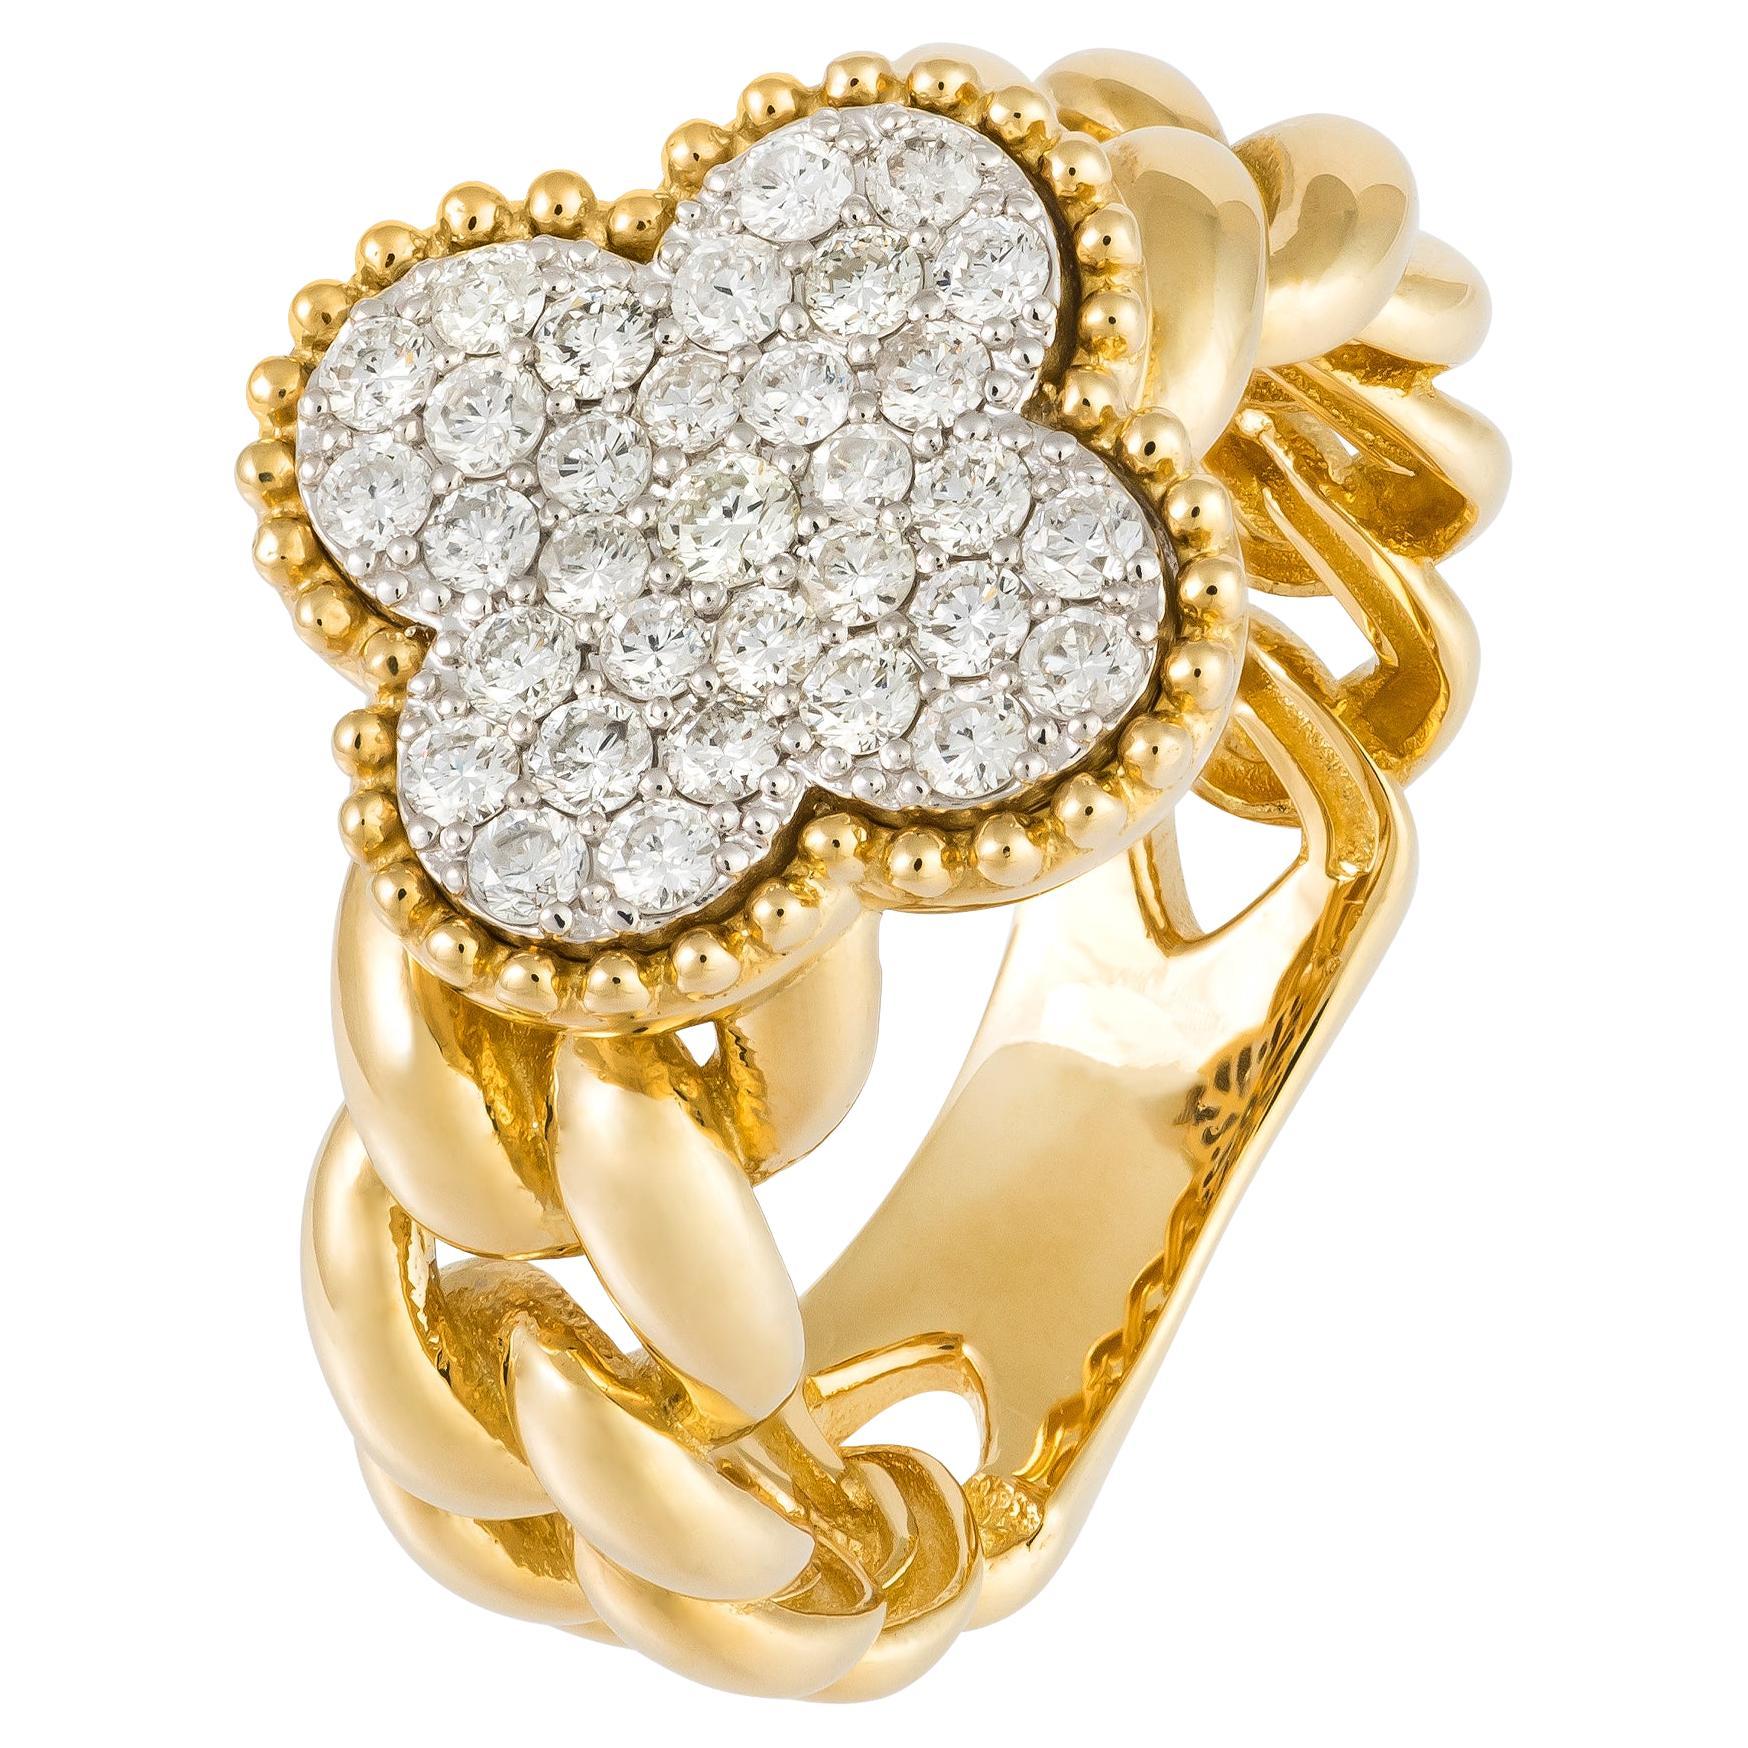 Stunning Yellow 18K Gold White Diamond Ring For Her